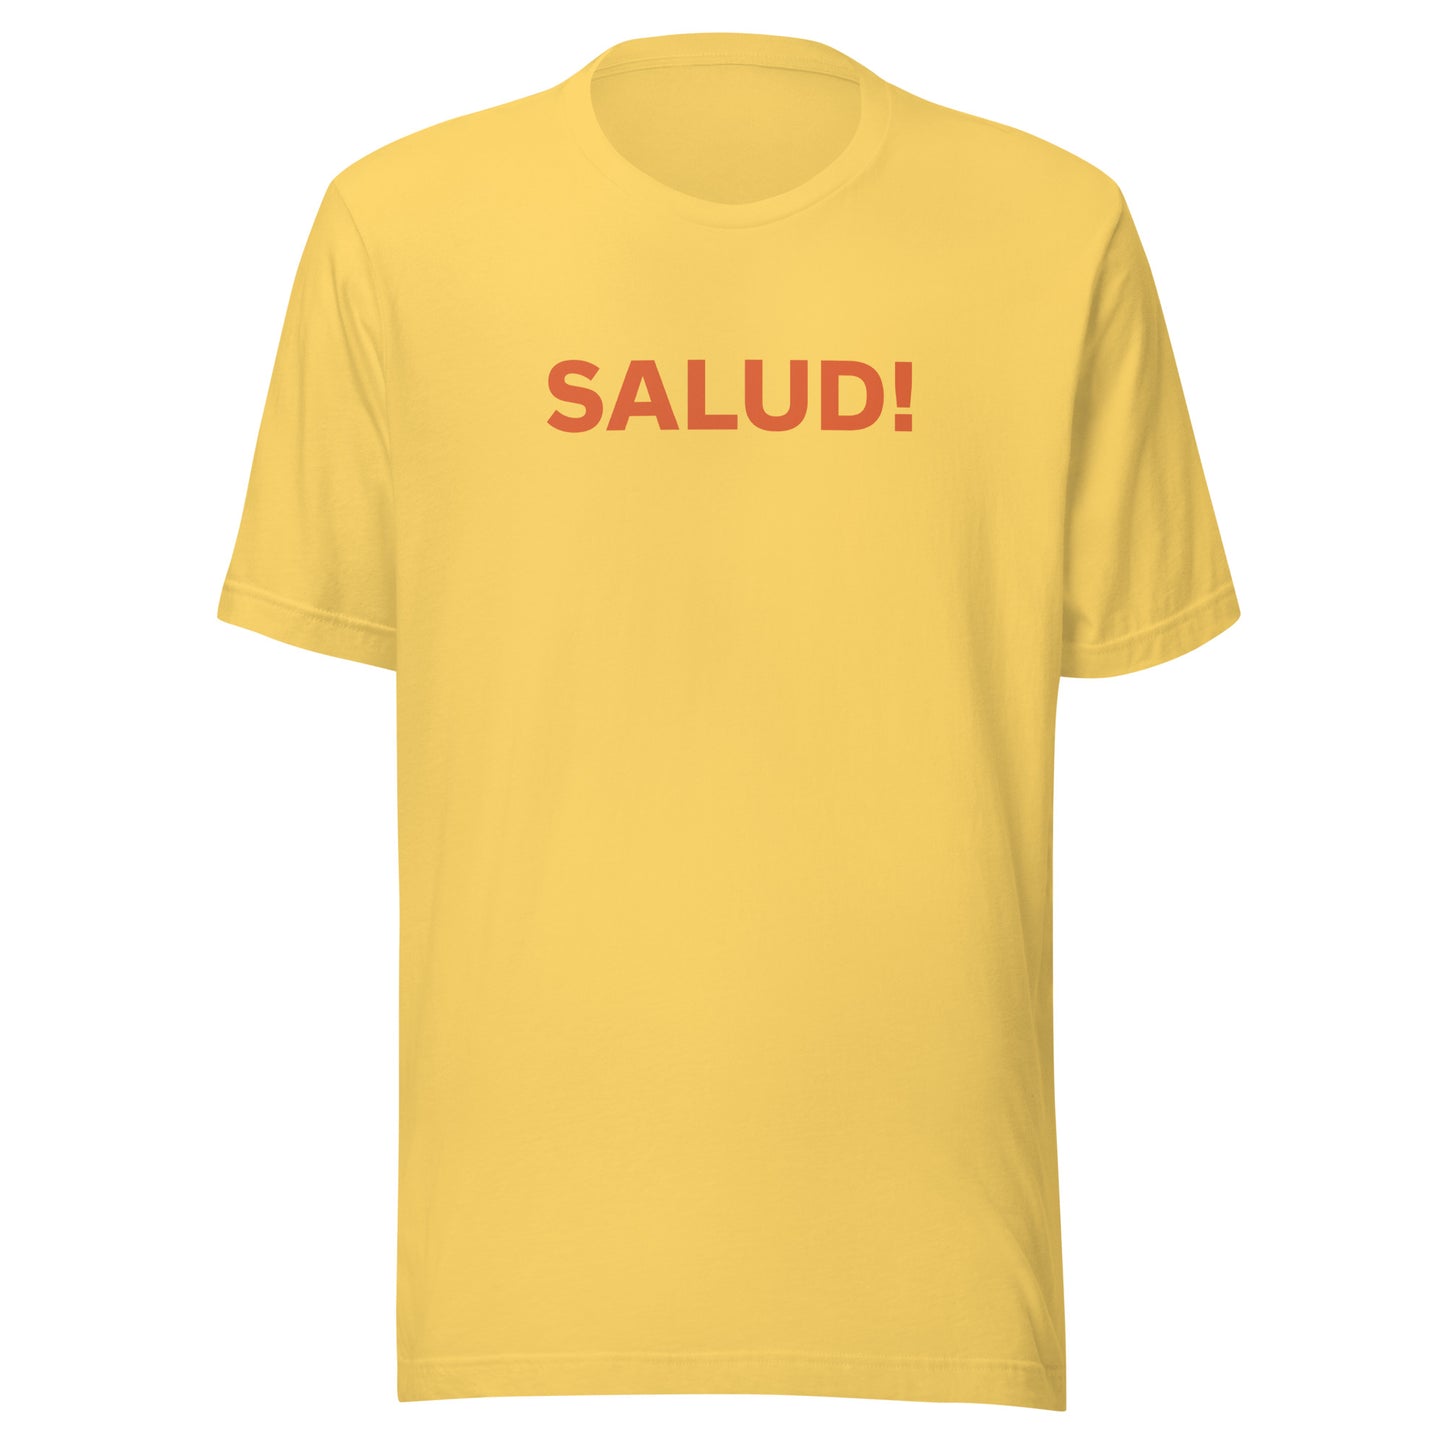 SALUD T-Shirt | Art in Aging